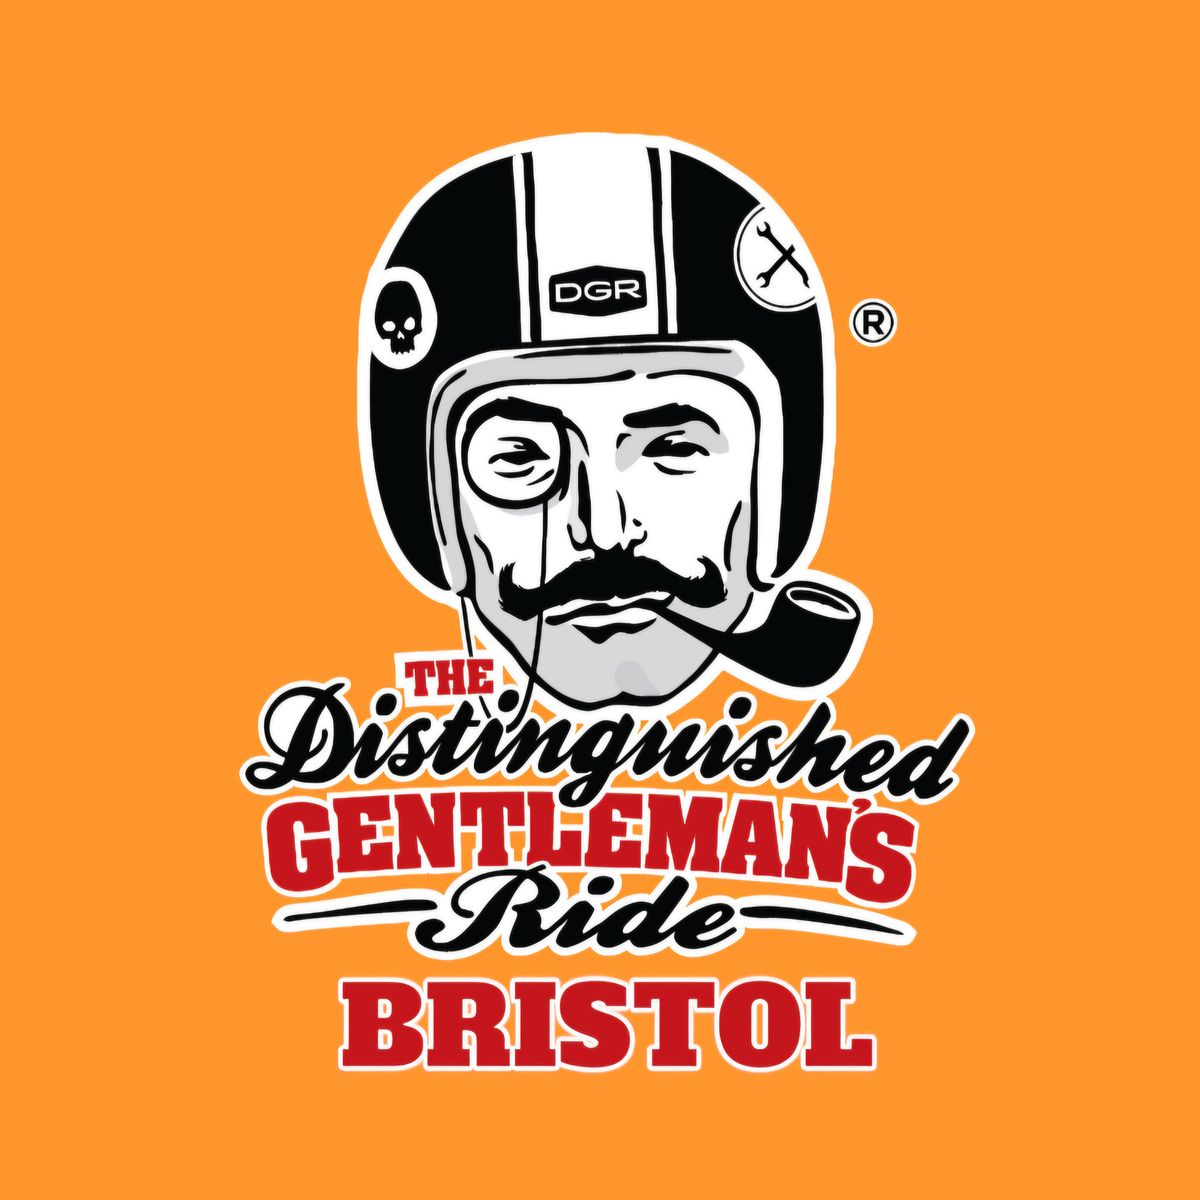 The DGR Bristol to ...